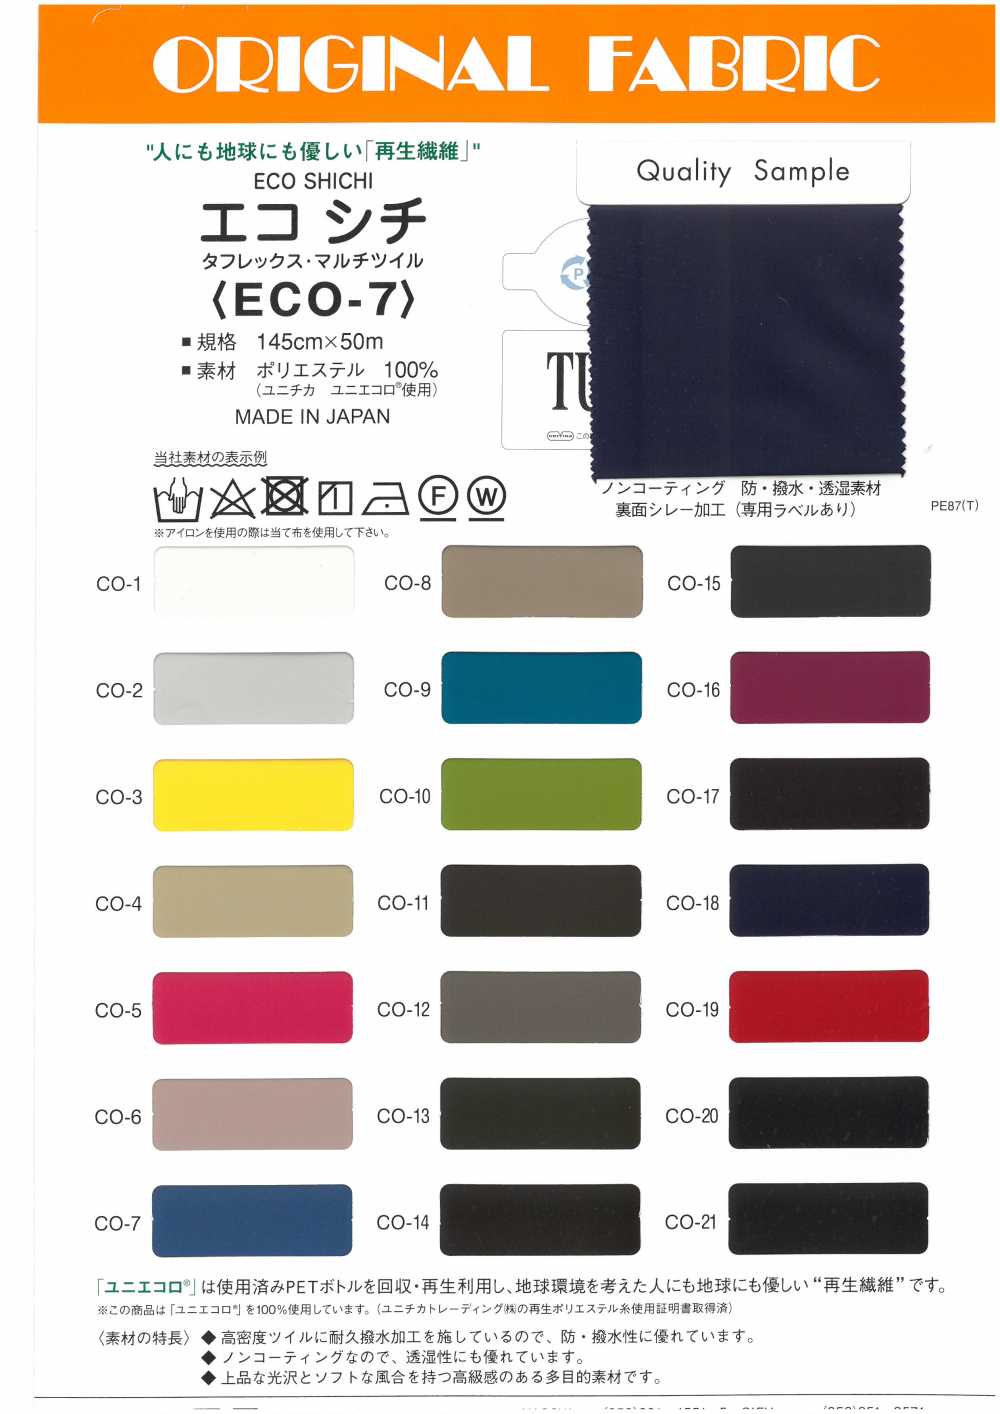 ECO-7 Eco-Citi &lt;Taflex Multi-Twill&gt;[Fabrica Textil] Masuda